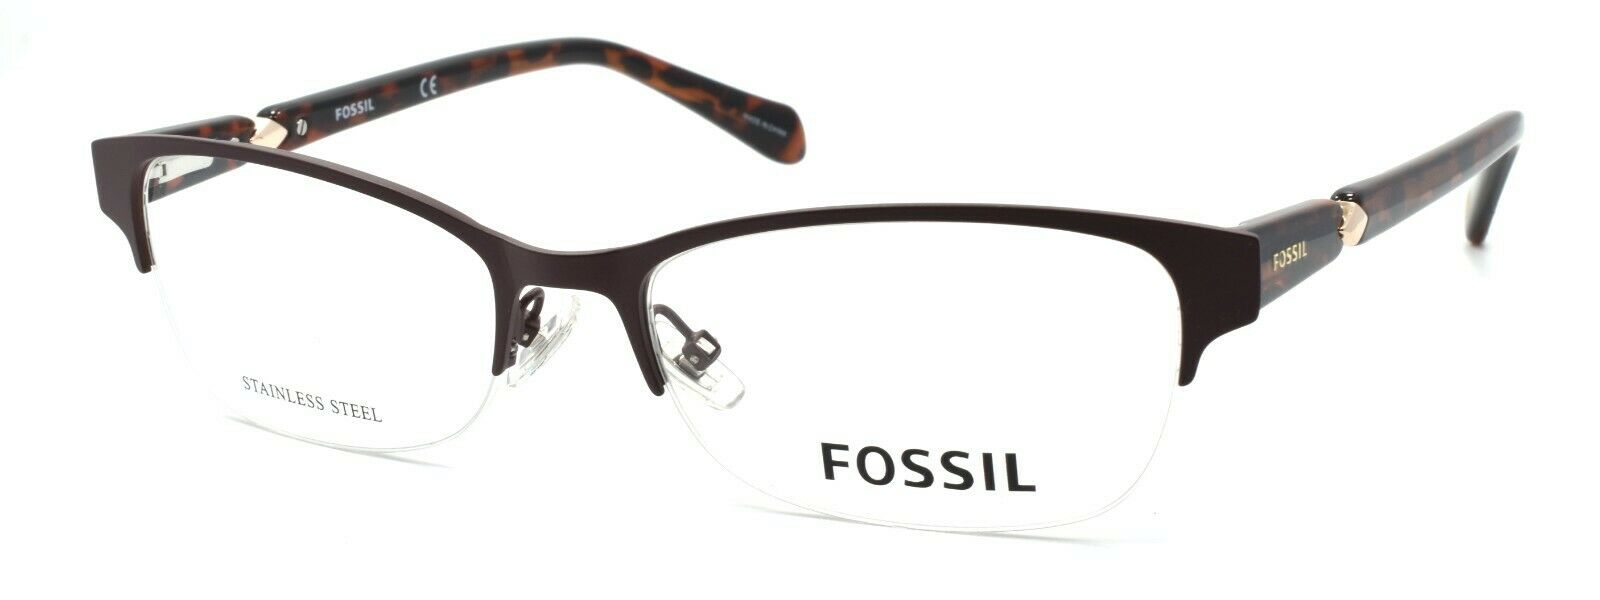 1-Fossil FOS 7000 0EG Women's Eyeglasses Frames Half-rim 53-17-140 Brown Havana-762753772756-IKSpecs